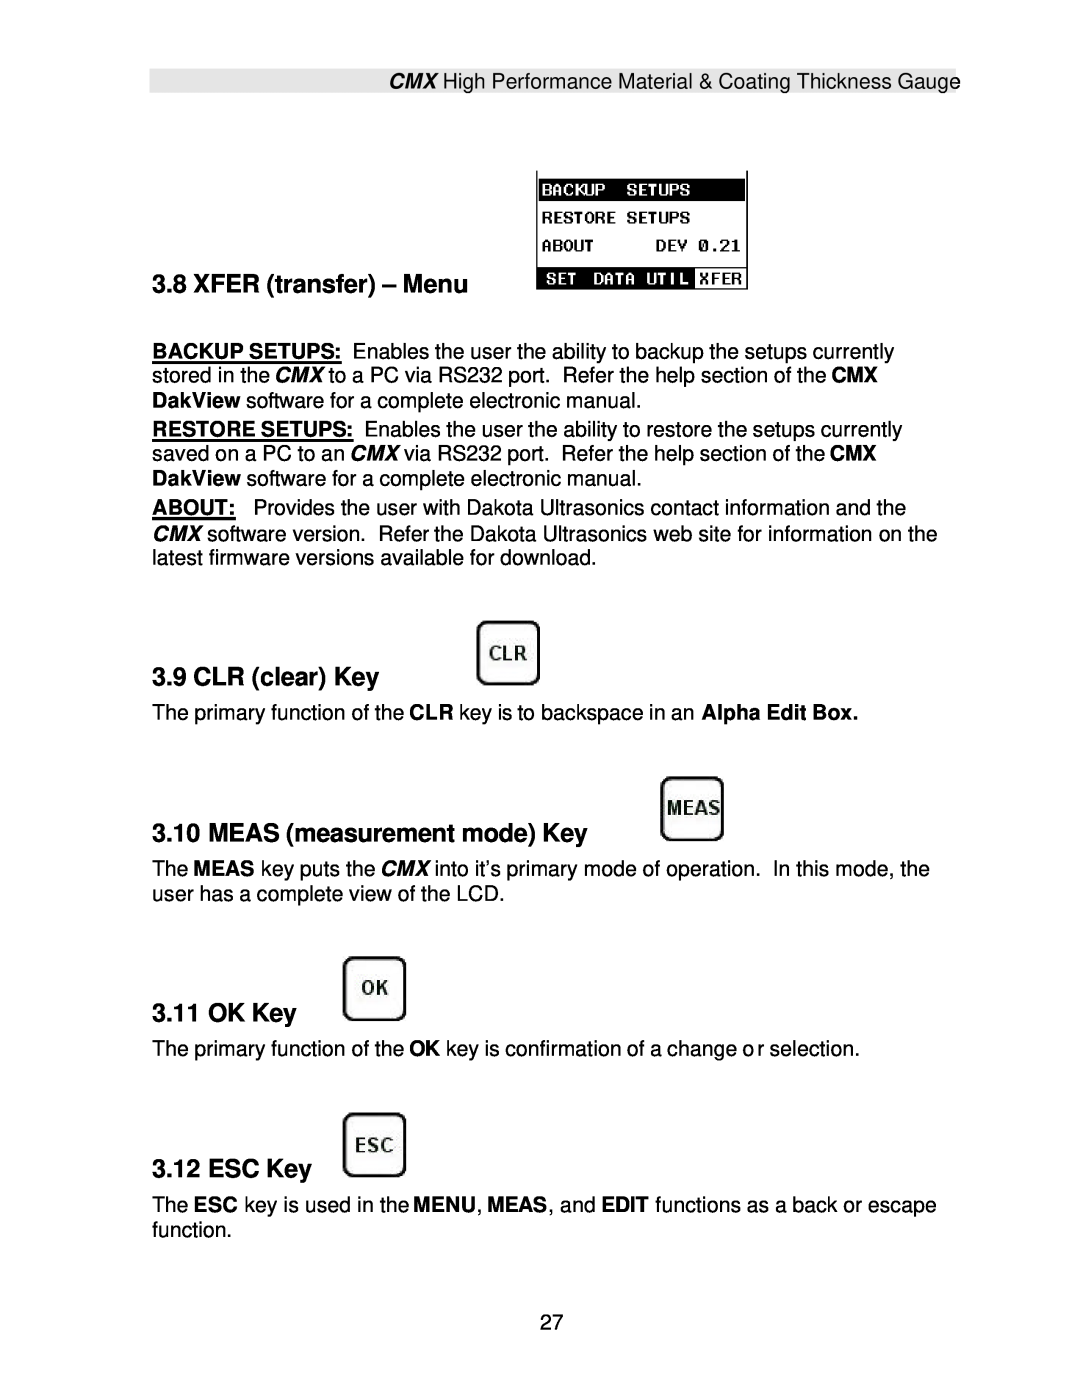 Dakota Digital CMX operation manual XFER transfer - Menu, CLR clear Key, MEAS measurement mode Key, OK Key, ESC Key 